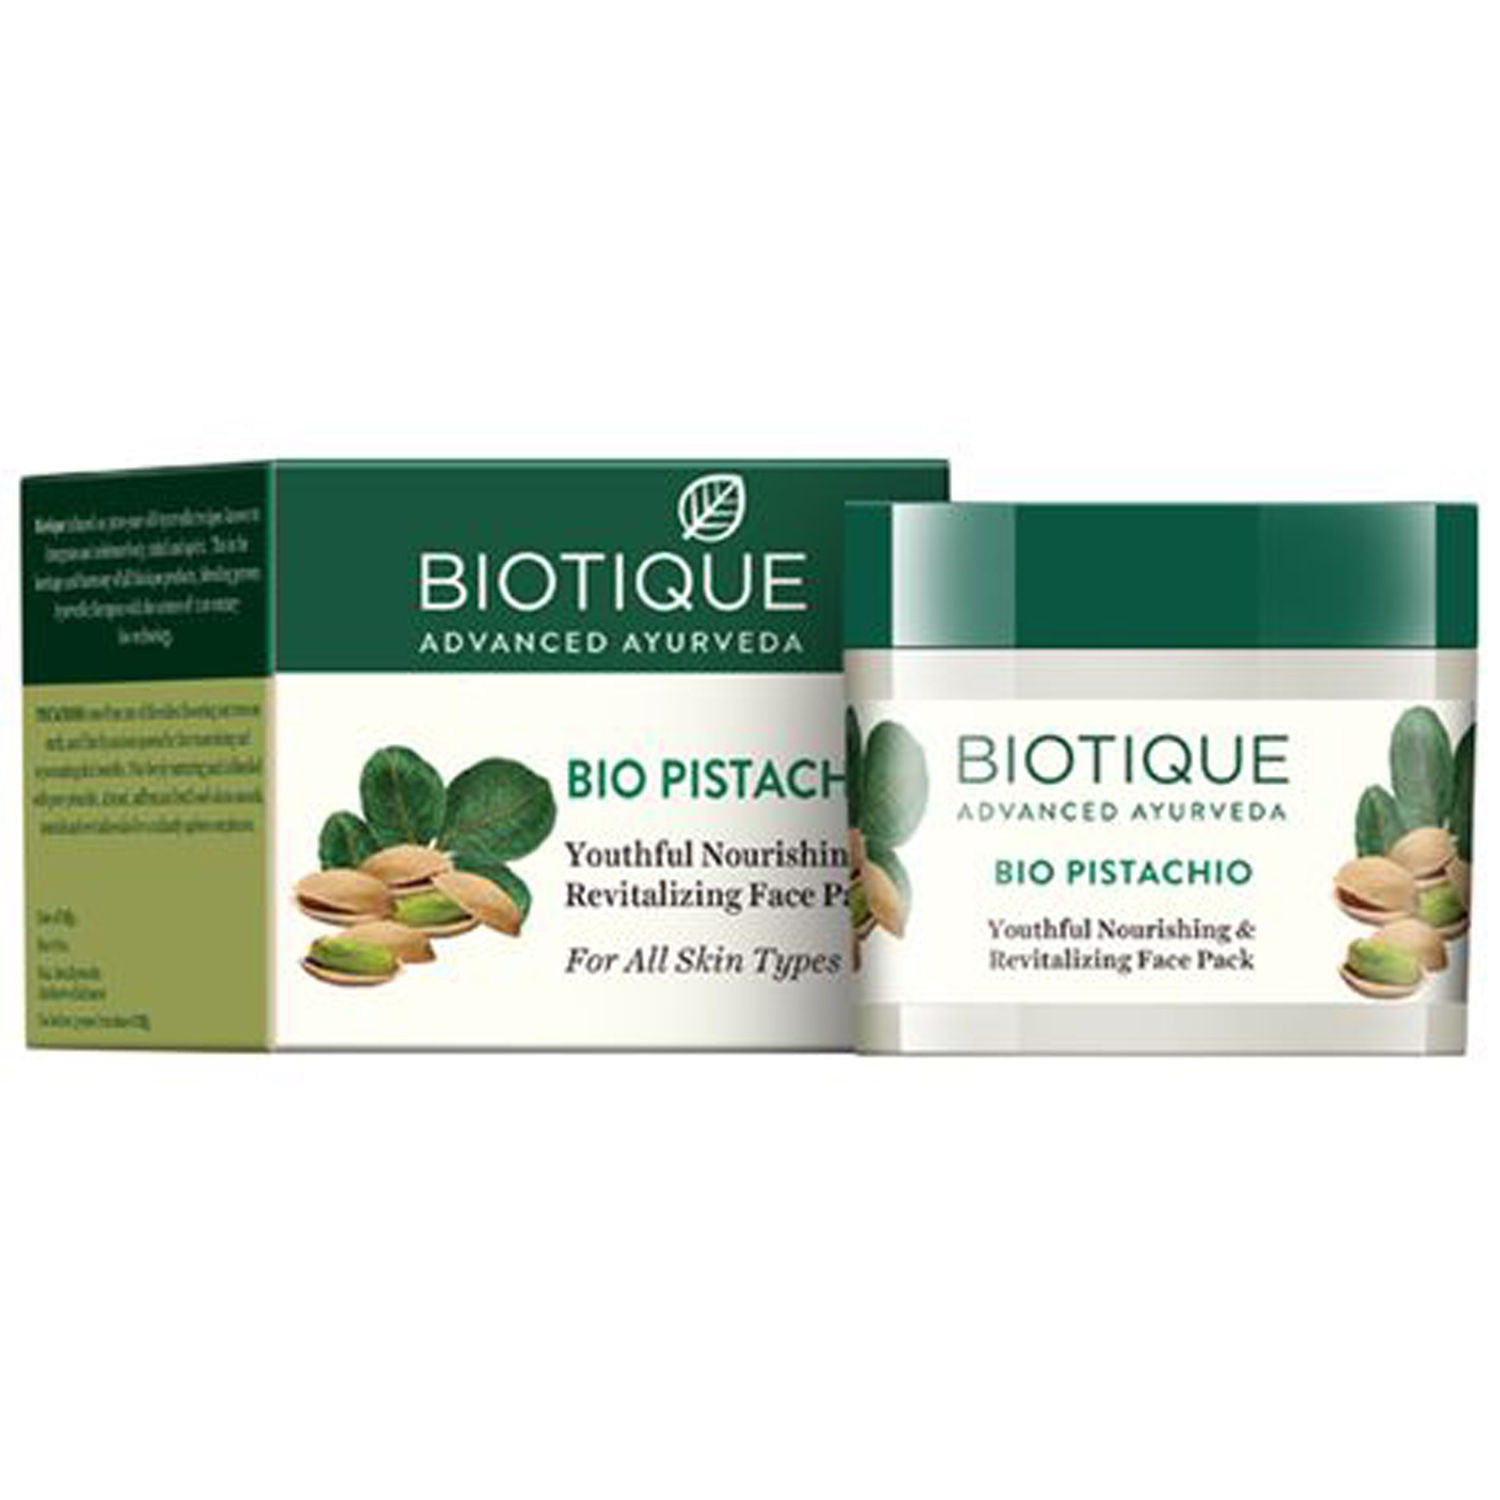 Biotique Bio Pistachio Youthful Nourishing & Revitalizing Face Pack, 50 gm, Pack of 1 